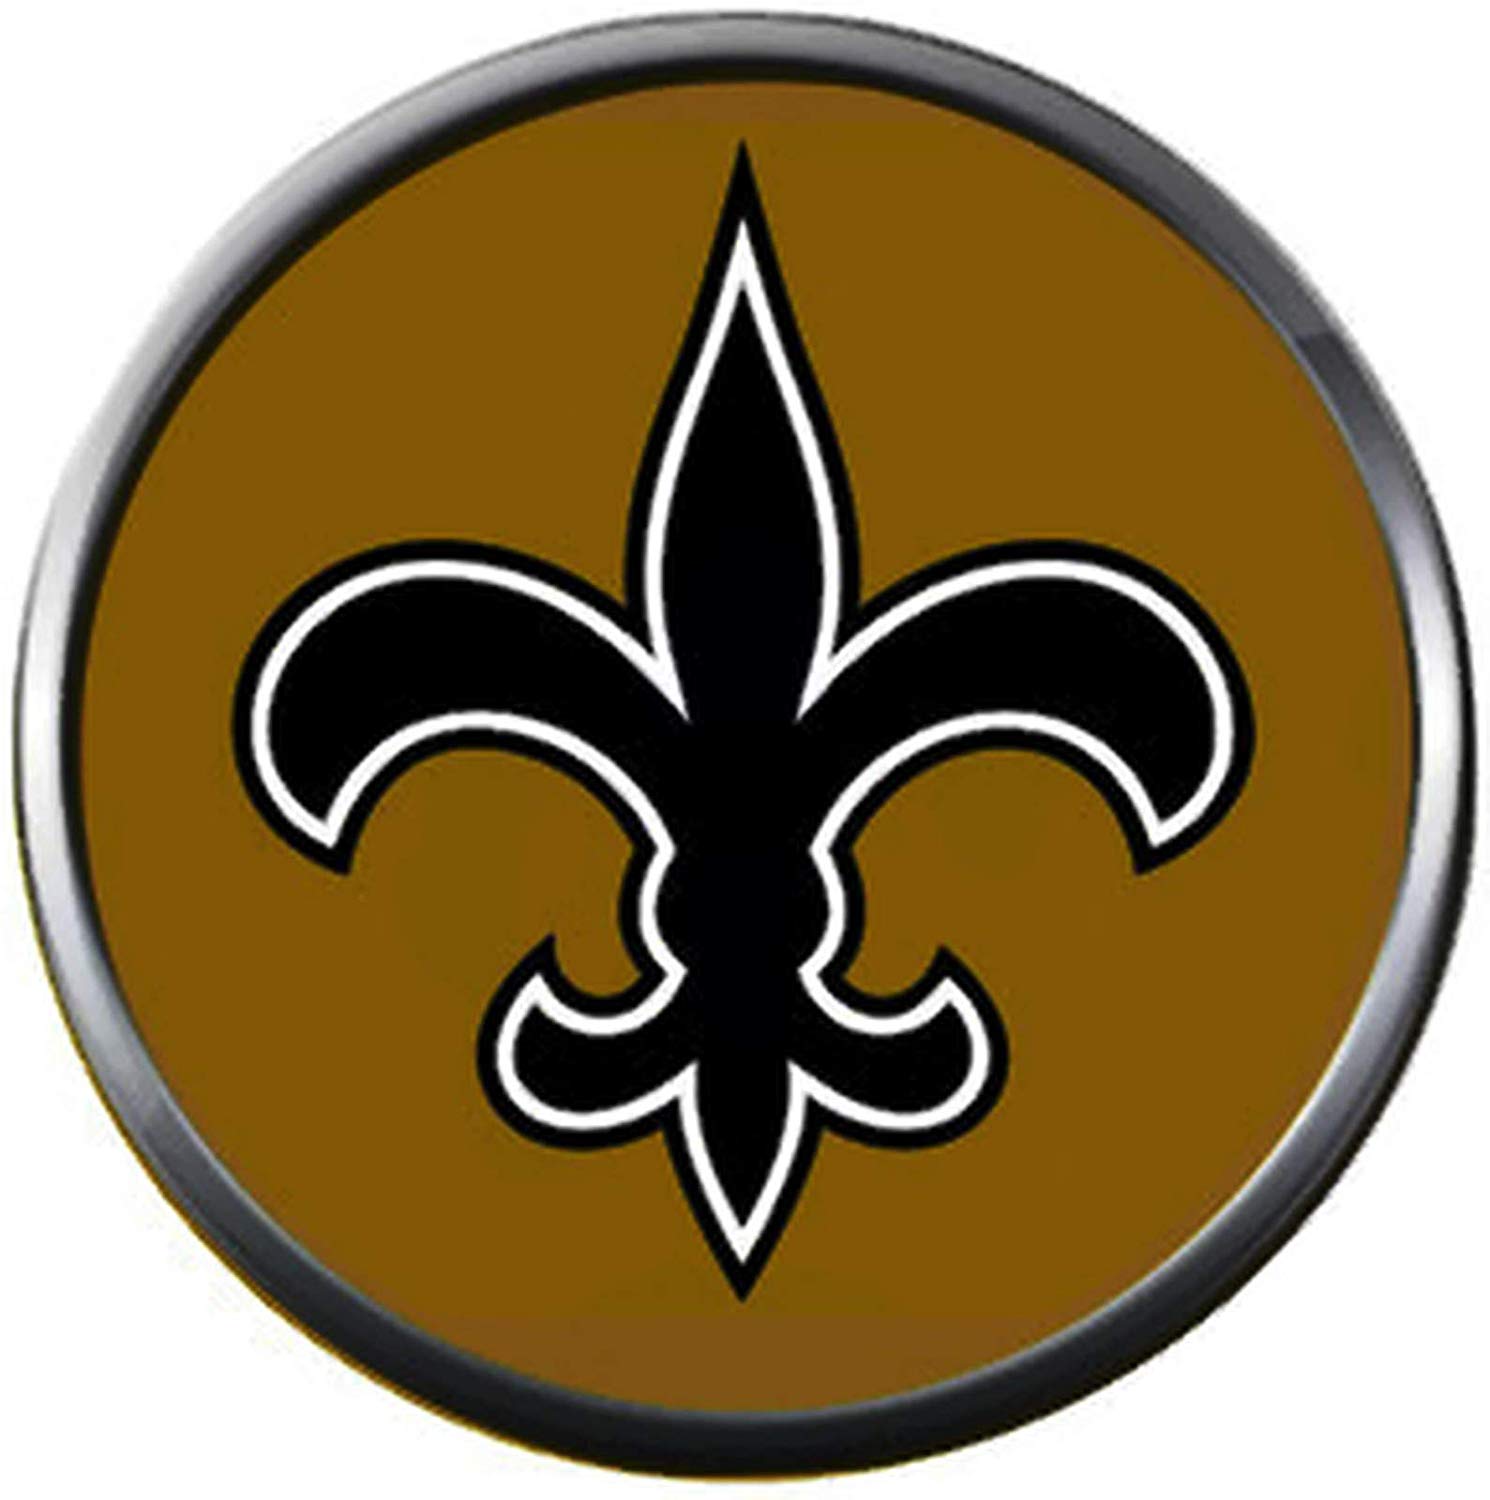 Orleans Logo - Amazon.com: NFL New Orleans Saints Black Logo On Old Gold Sports Fan ...